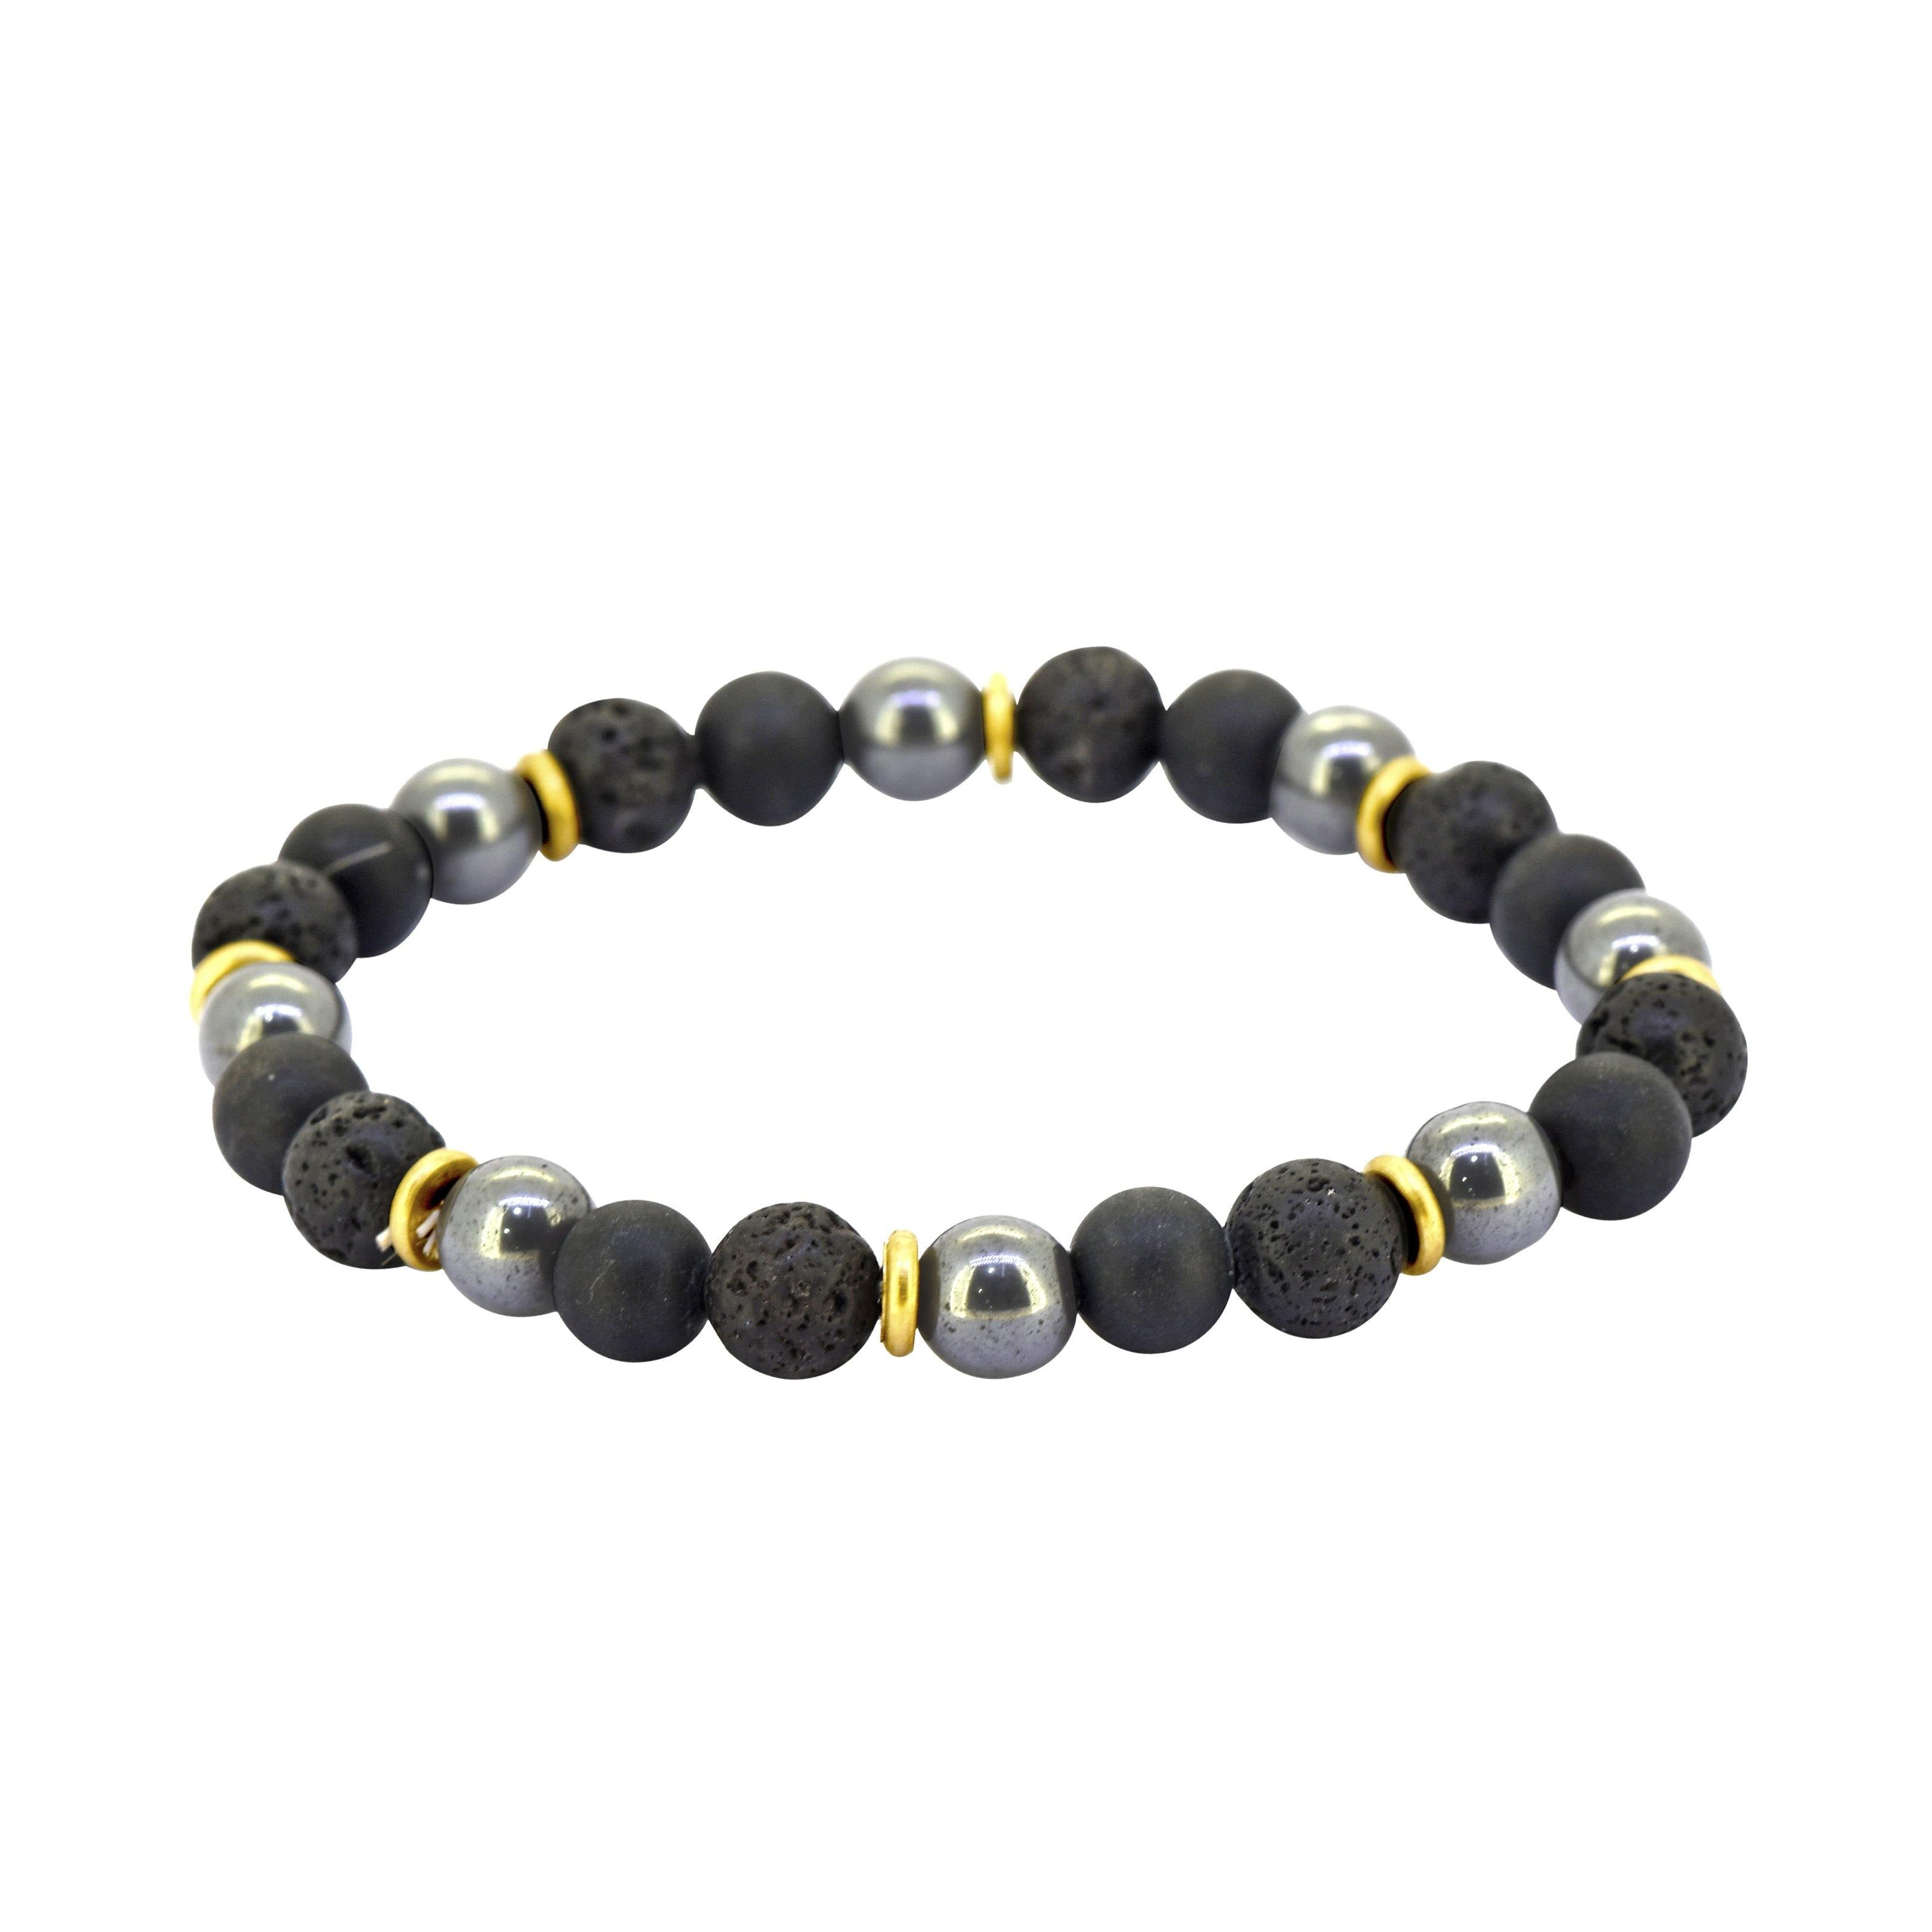 Black Onyx Hematite Volcanic Lava Brass Stretchable Beads Bracelet 7" For Men's Jewelry - YoTreasure